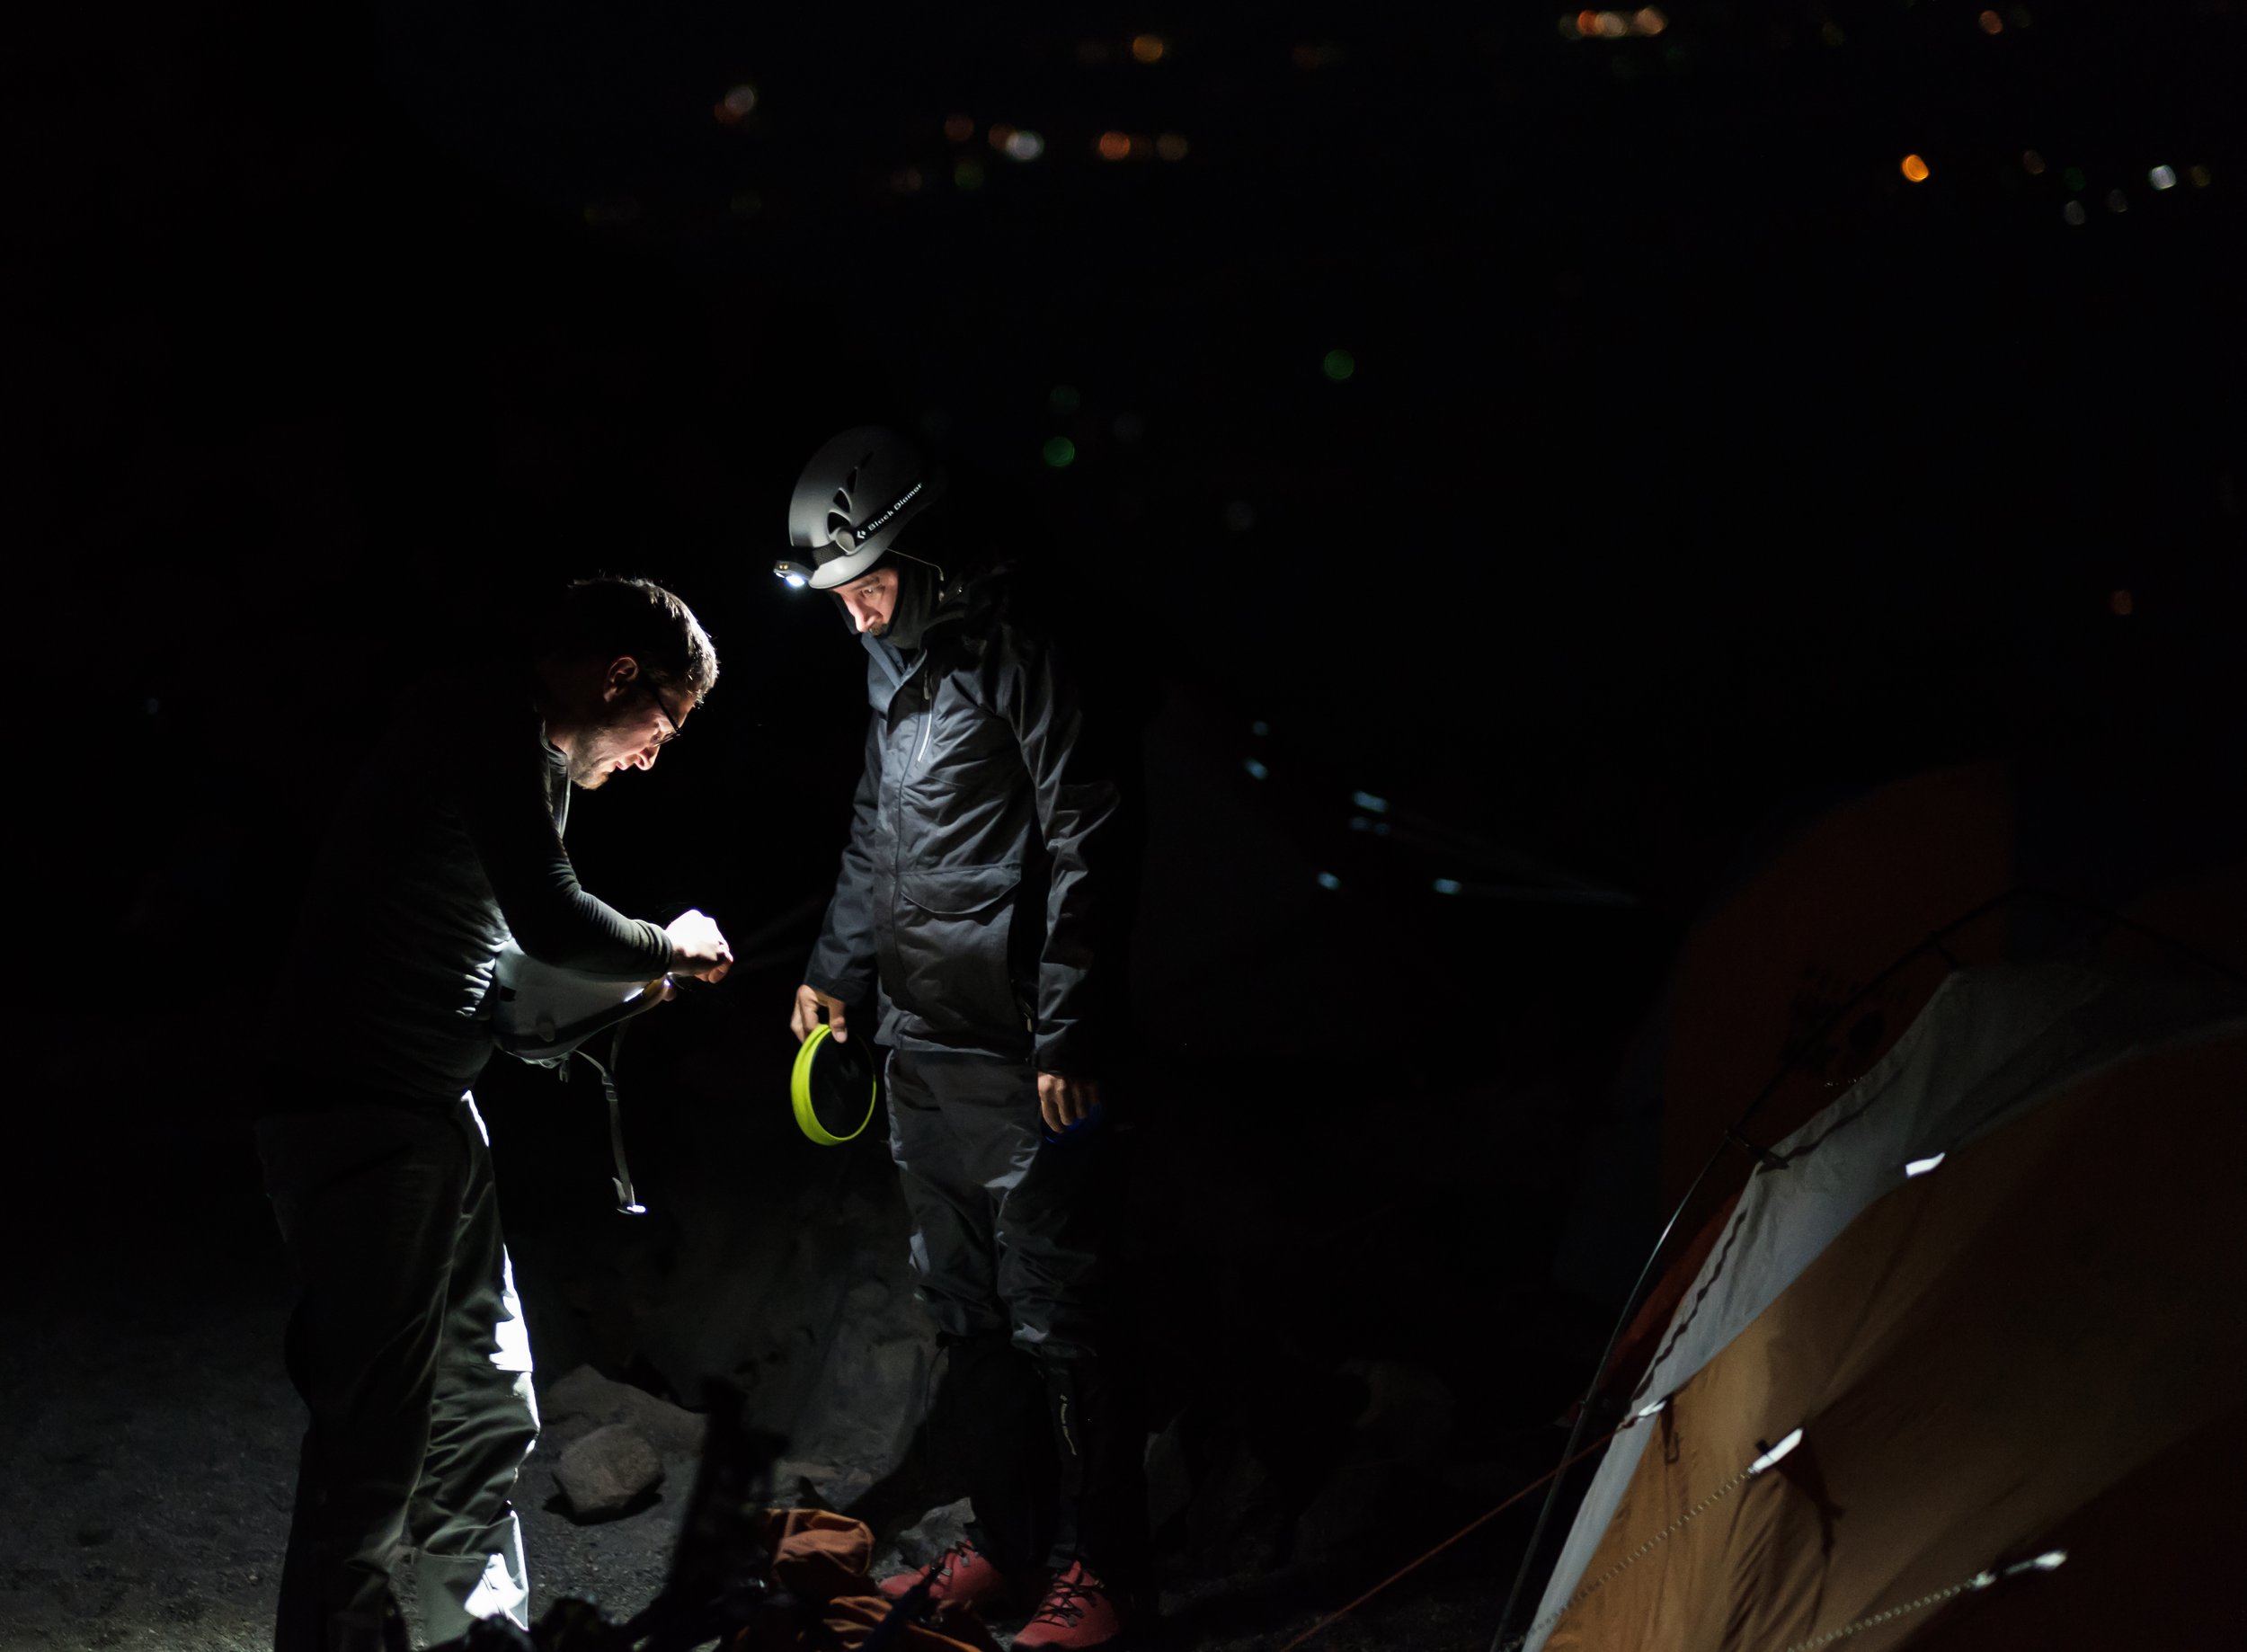 Climbers prepare to climb mt shasta in the dark